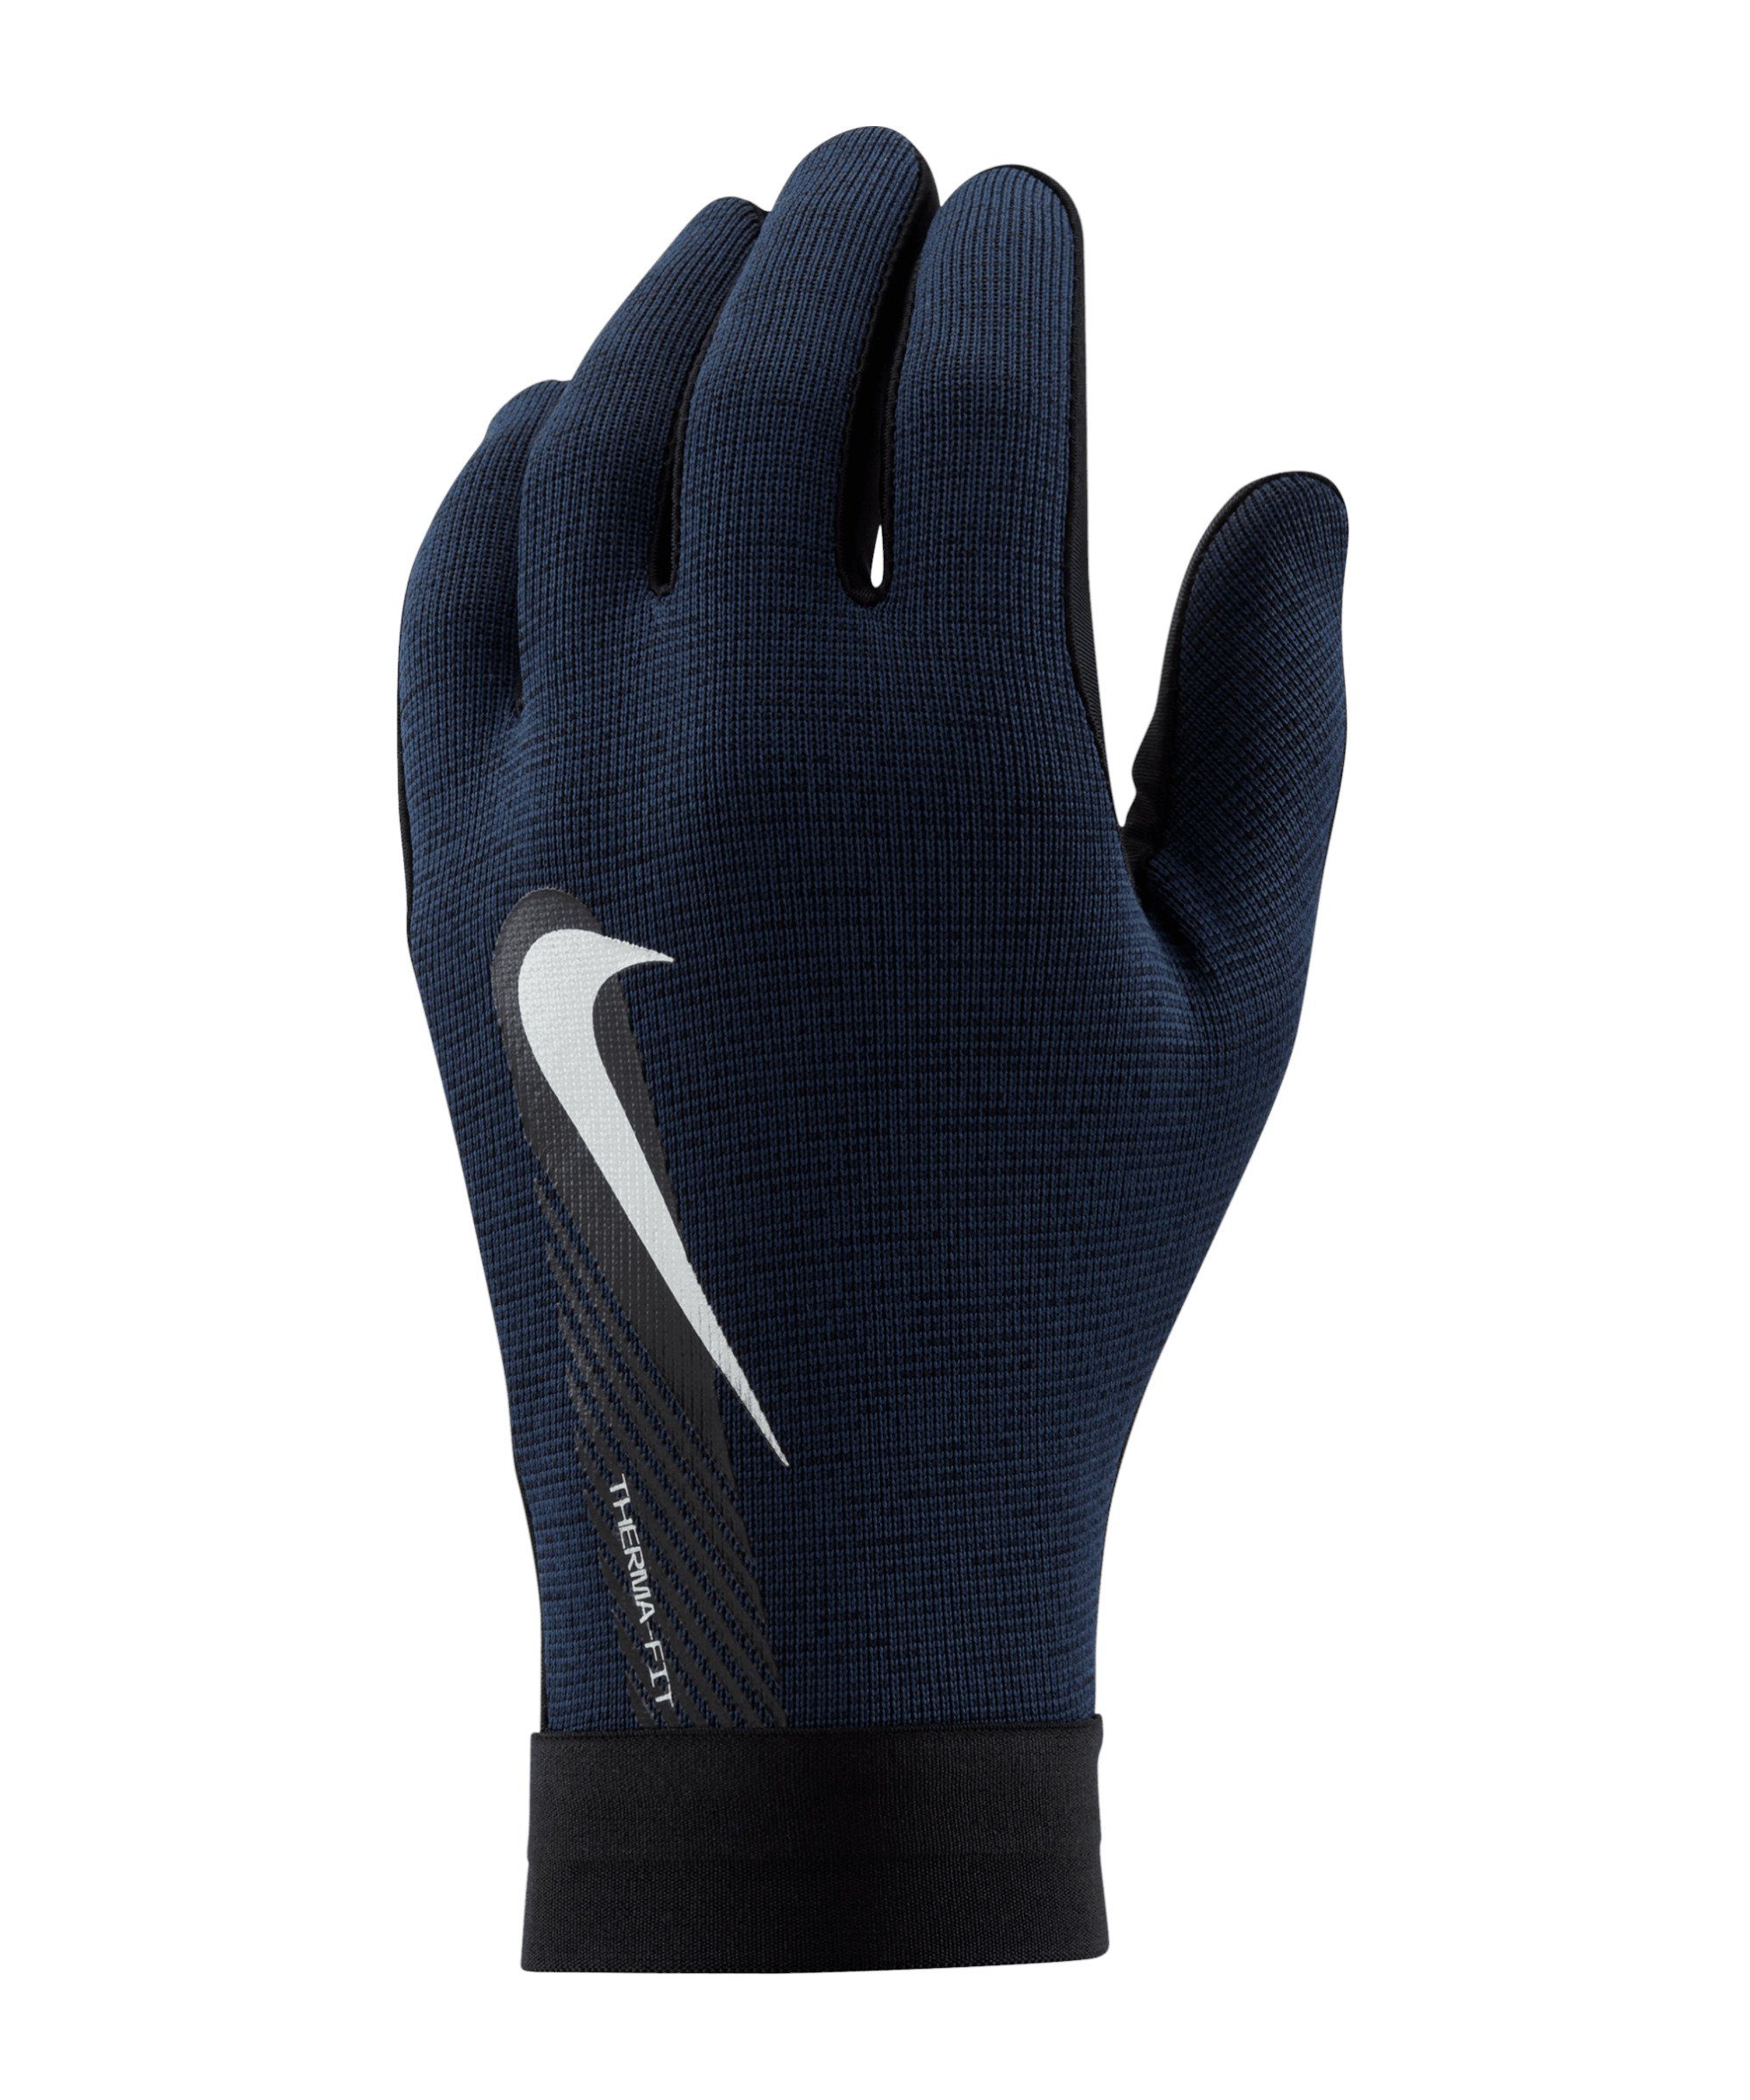 Nike Feldspielerhandschuhe Spielerhandschuh Kids Academy schwarzblau Therma-FIT